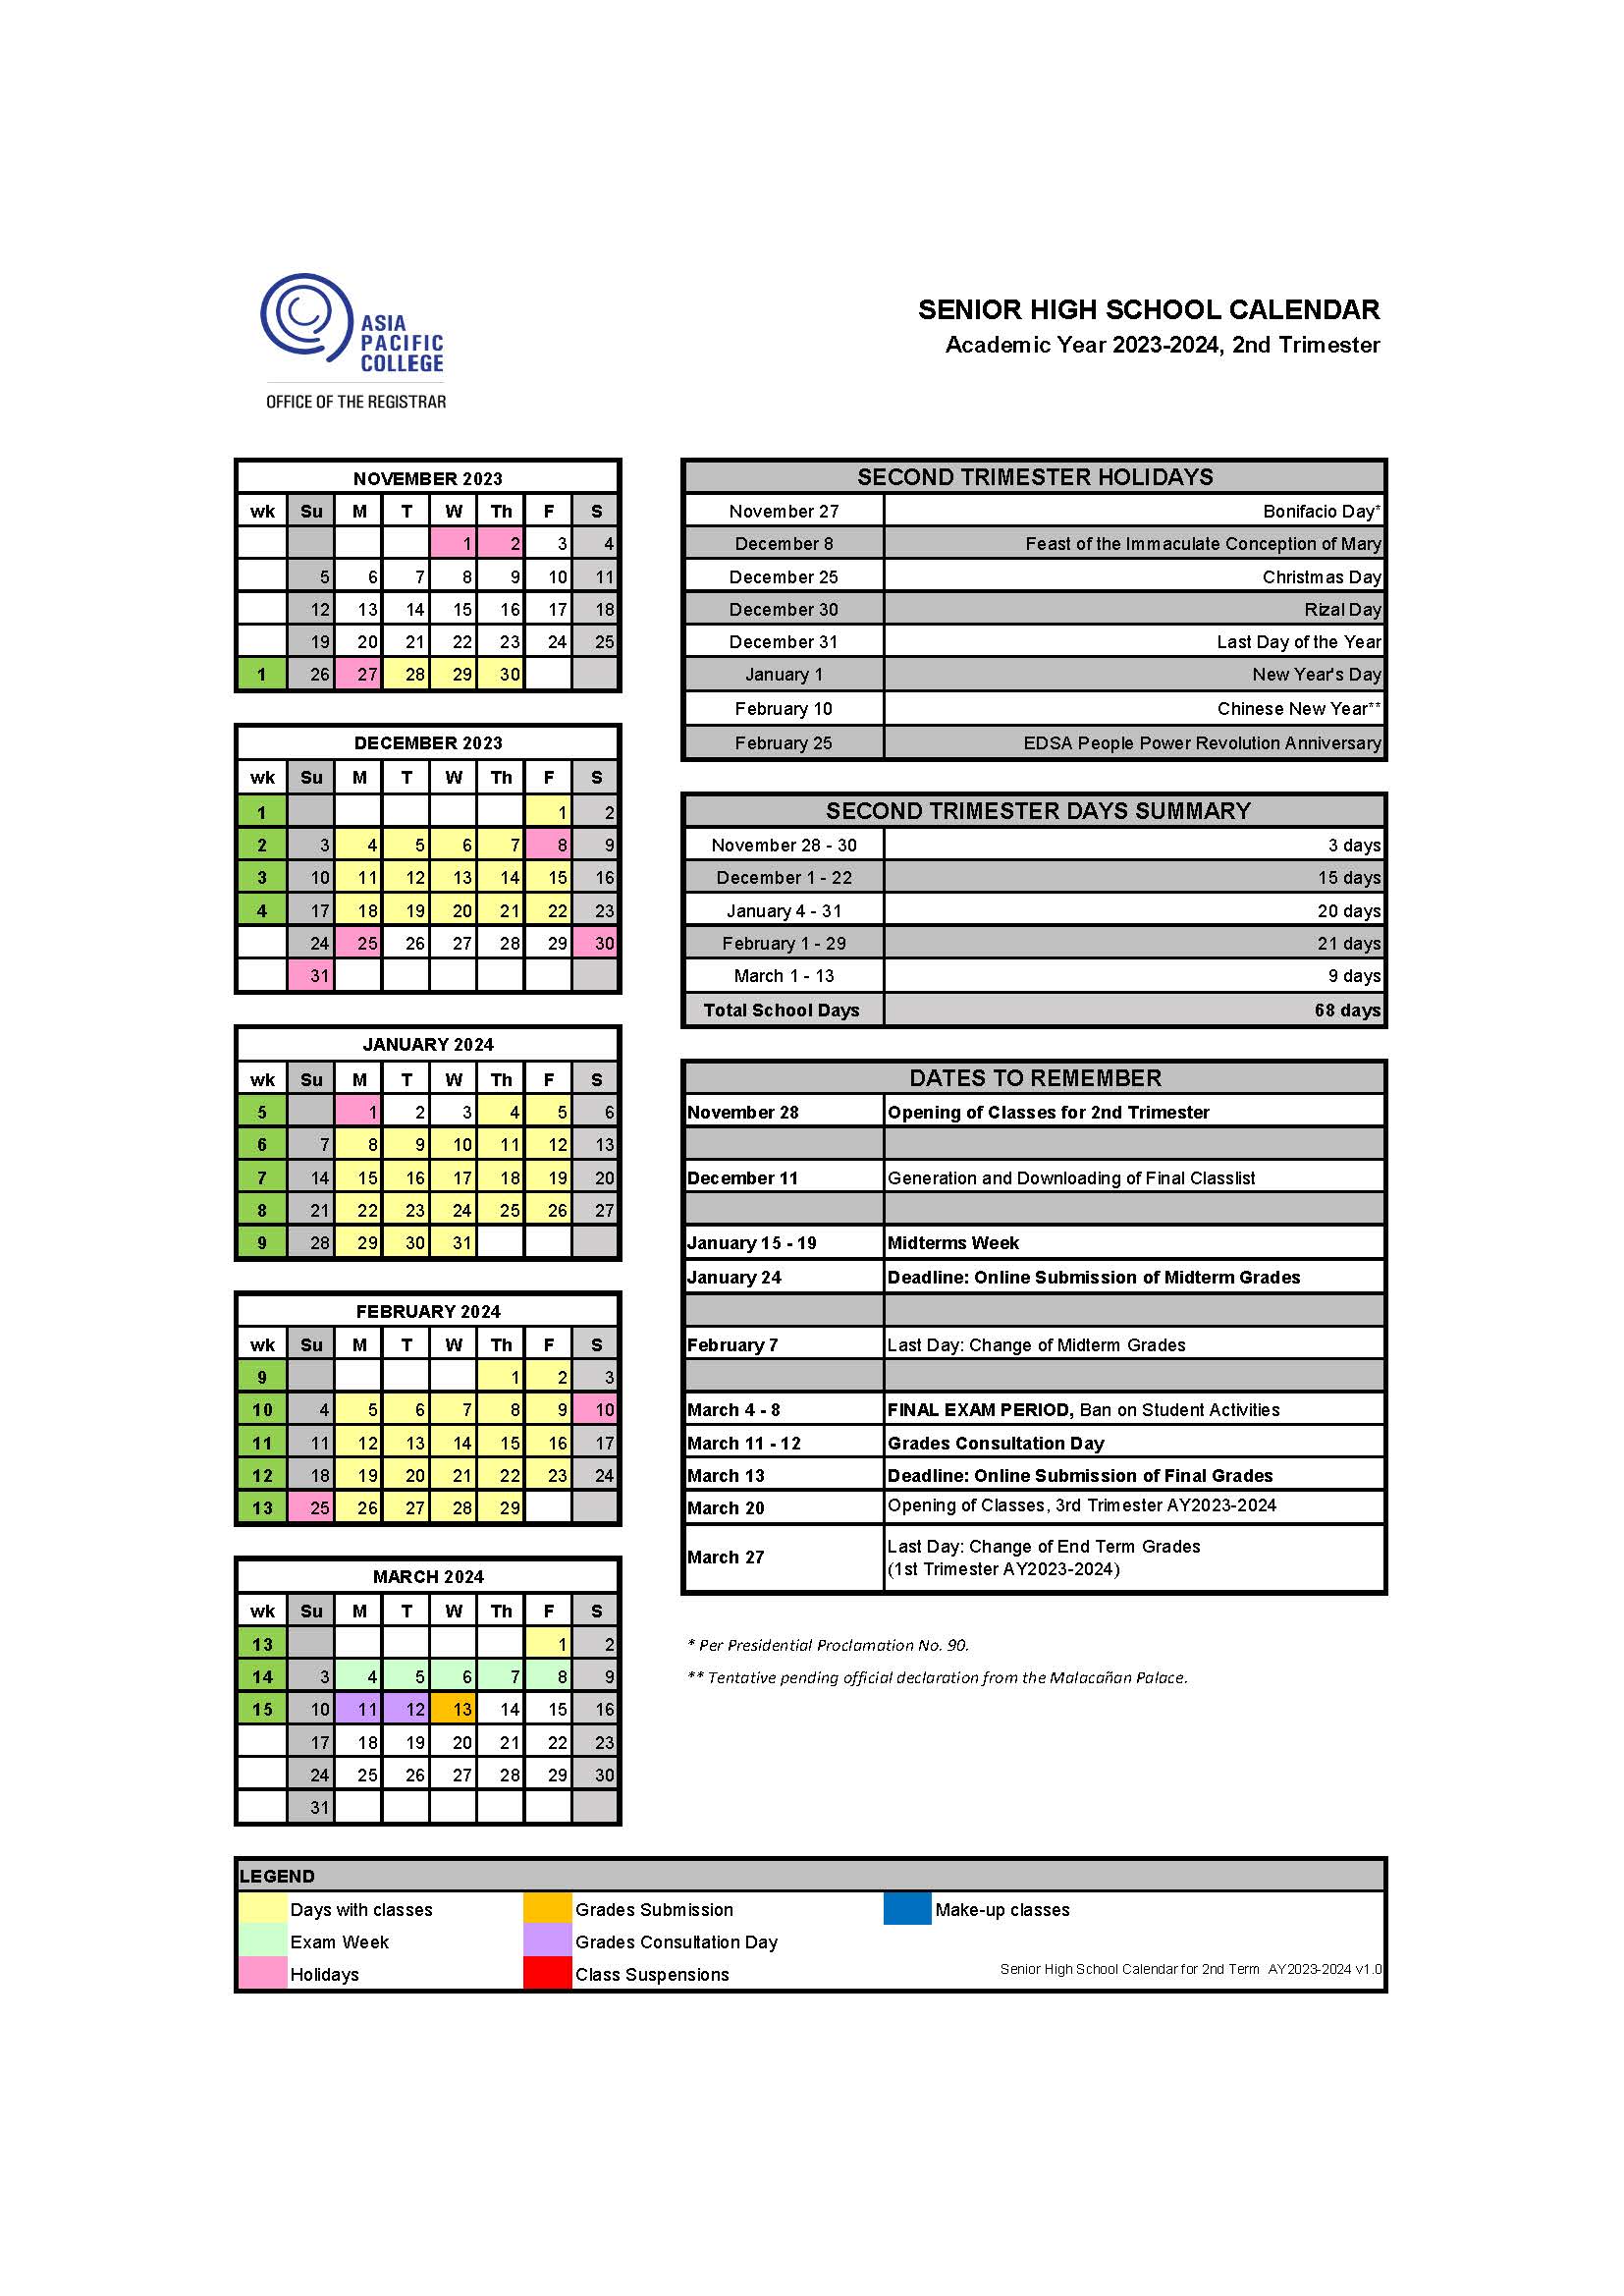 Term 2 Calendar (AY2023-24) - Senior High School v1